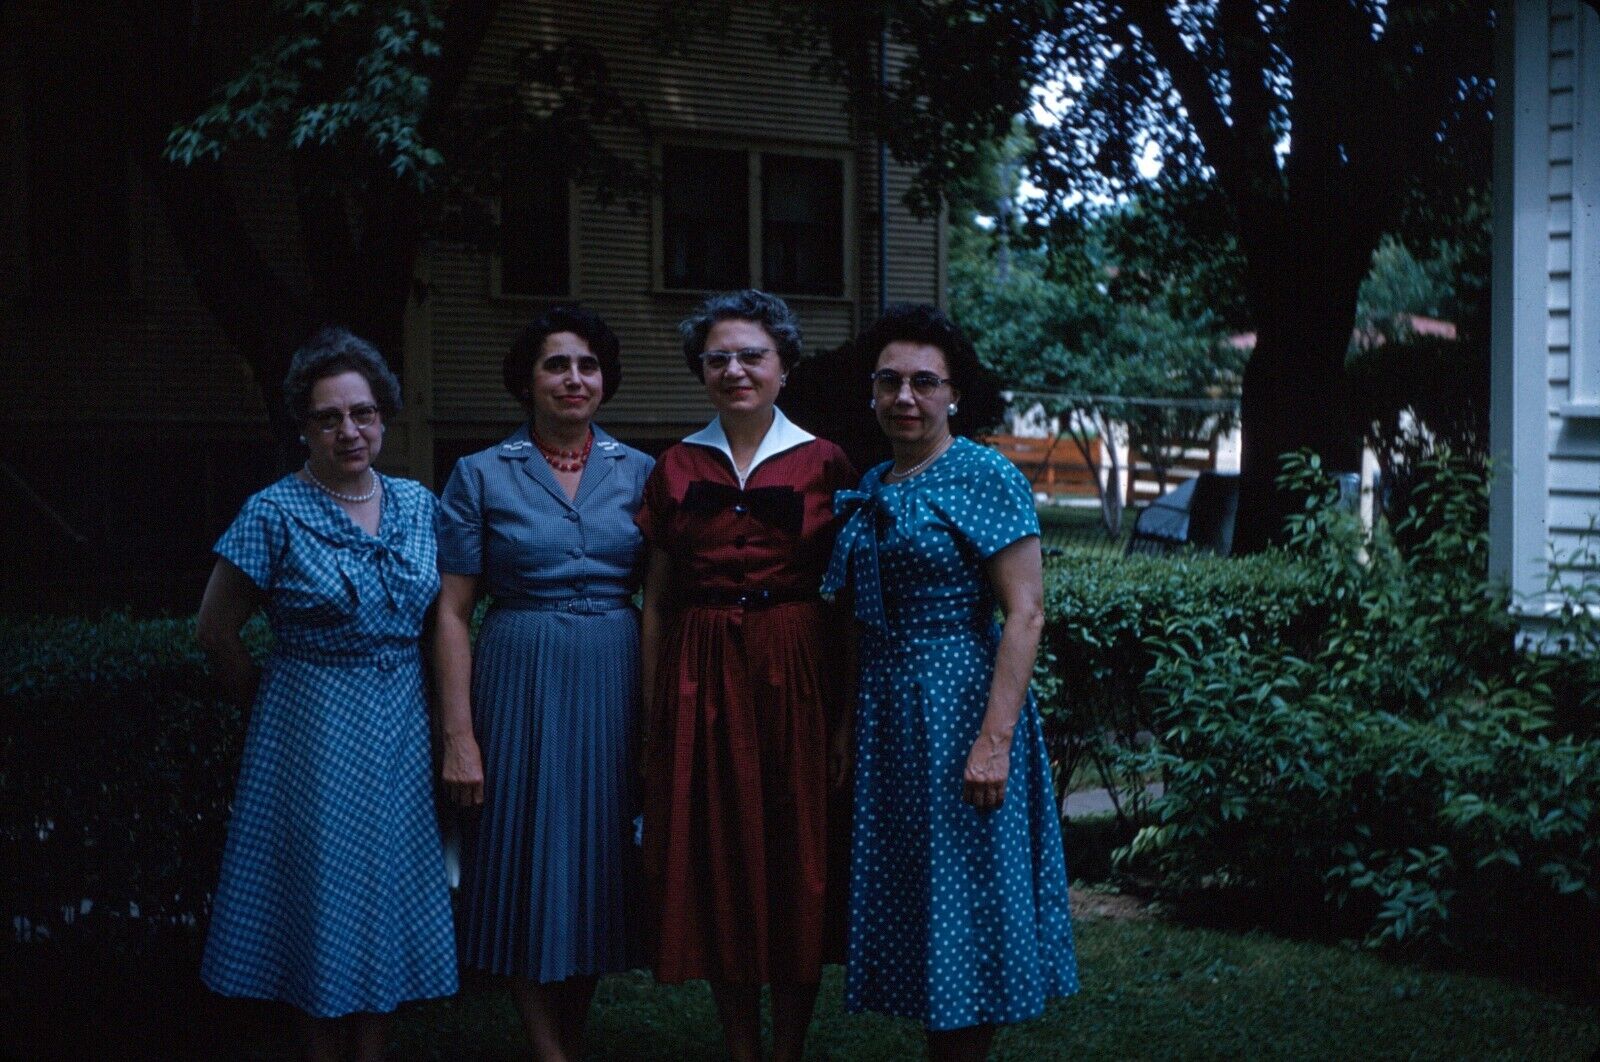 1960 Group of Four Women in Dresses Outside Vintage 35mm Slide